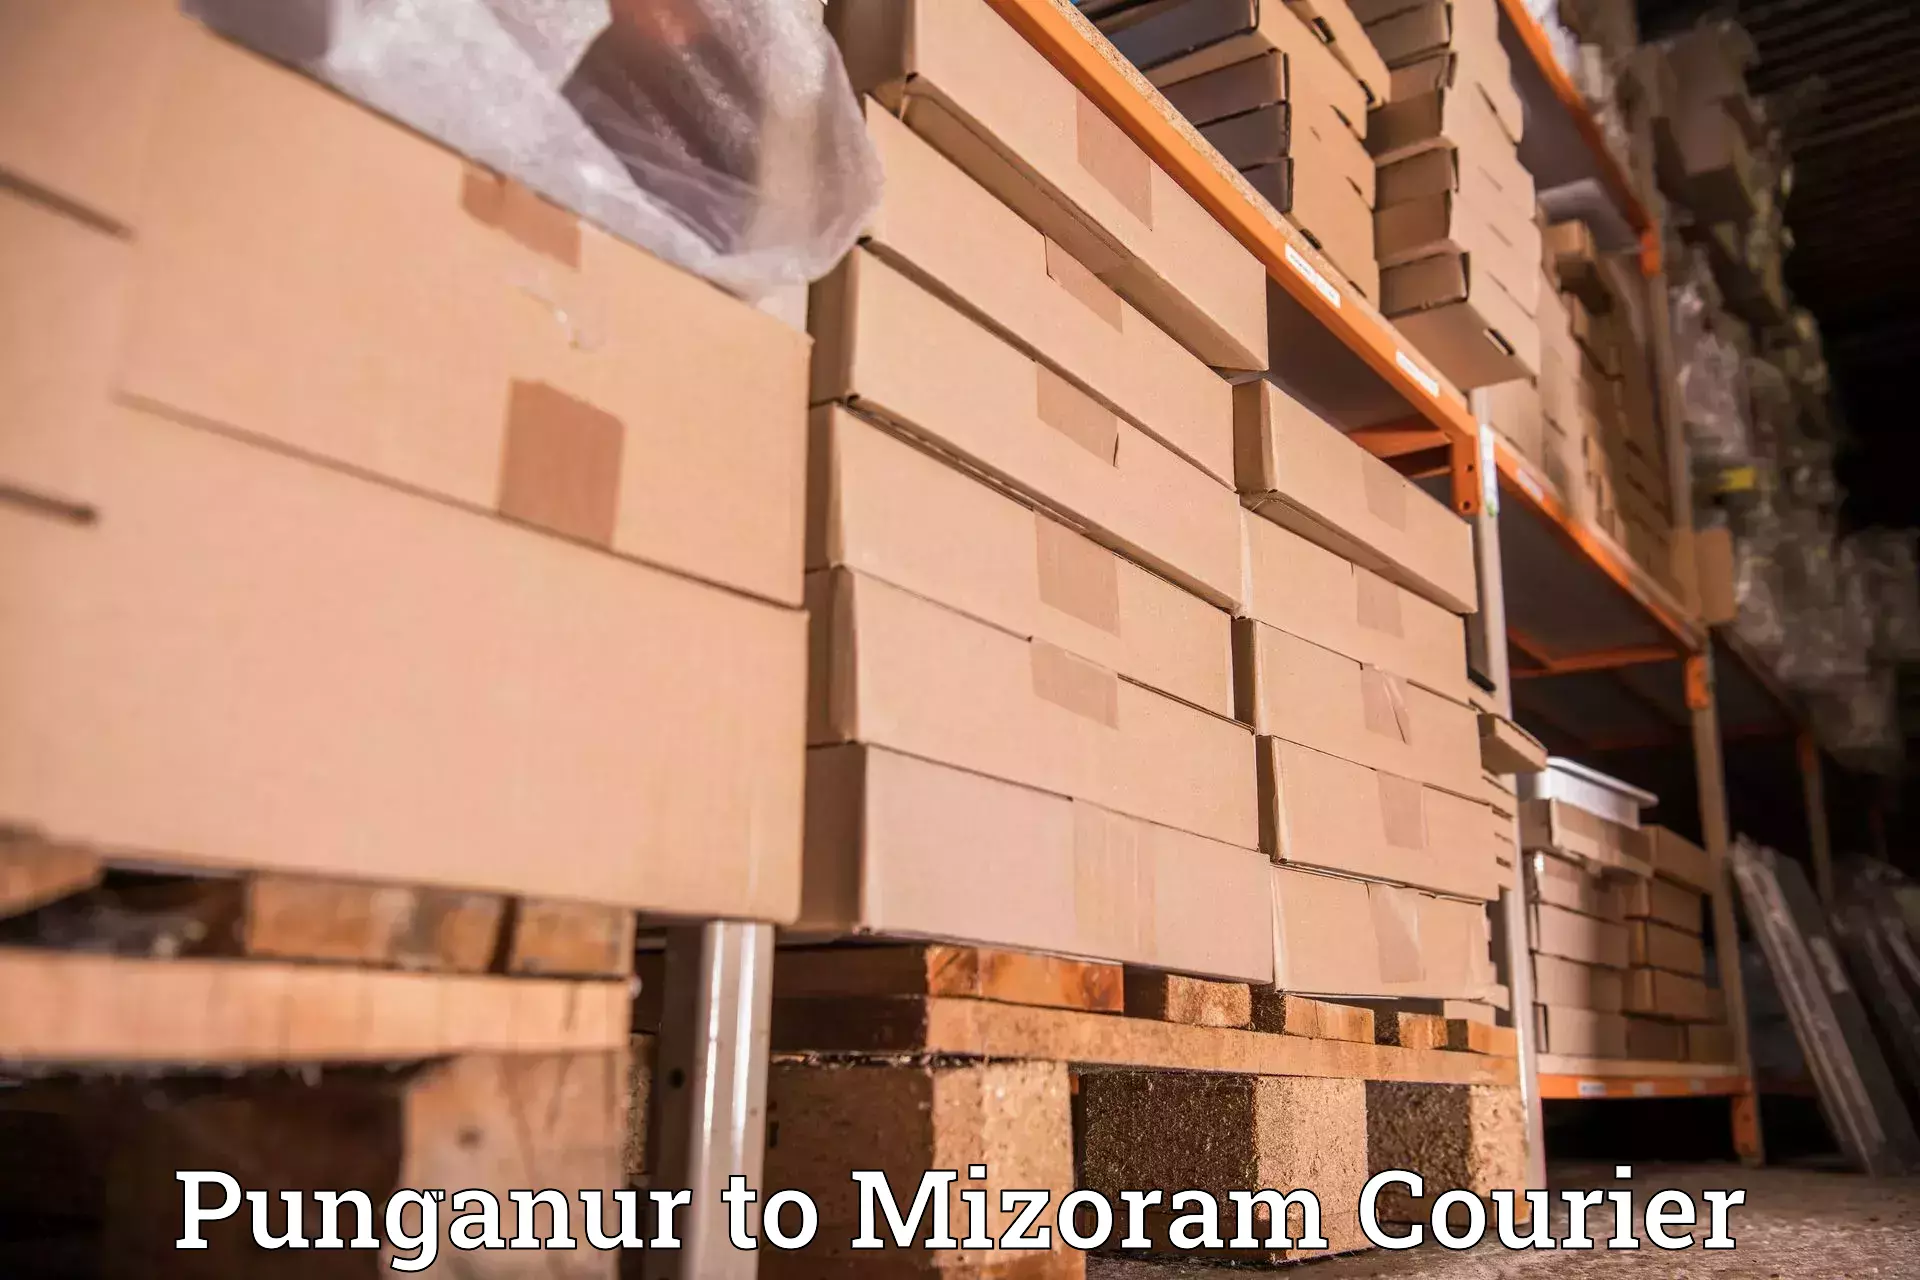 User-friendly courier app Punganur to Mizoram